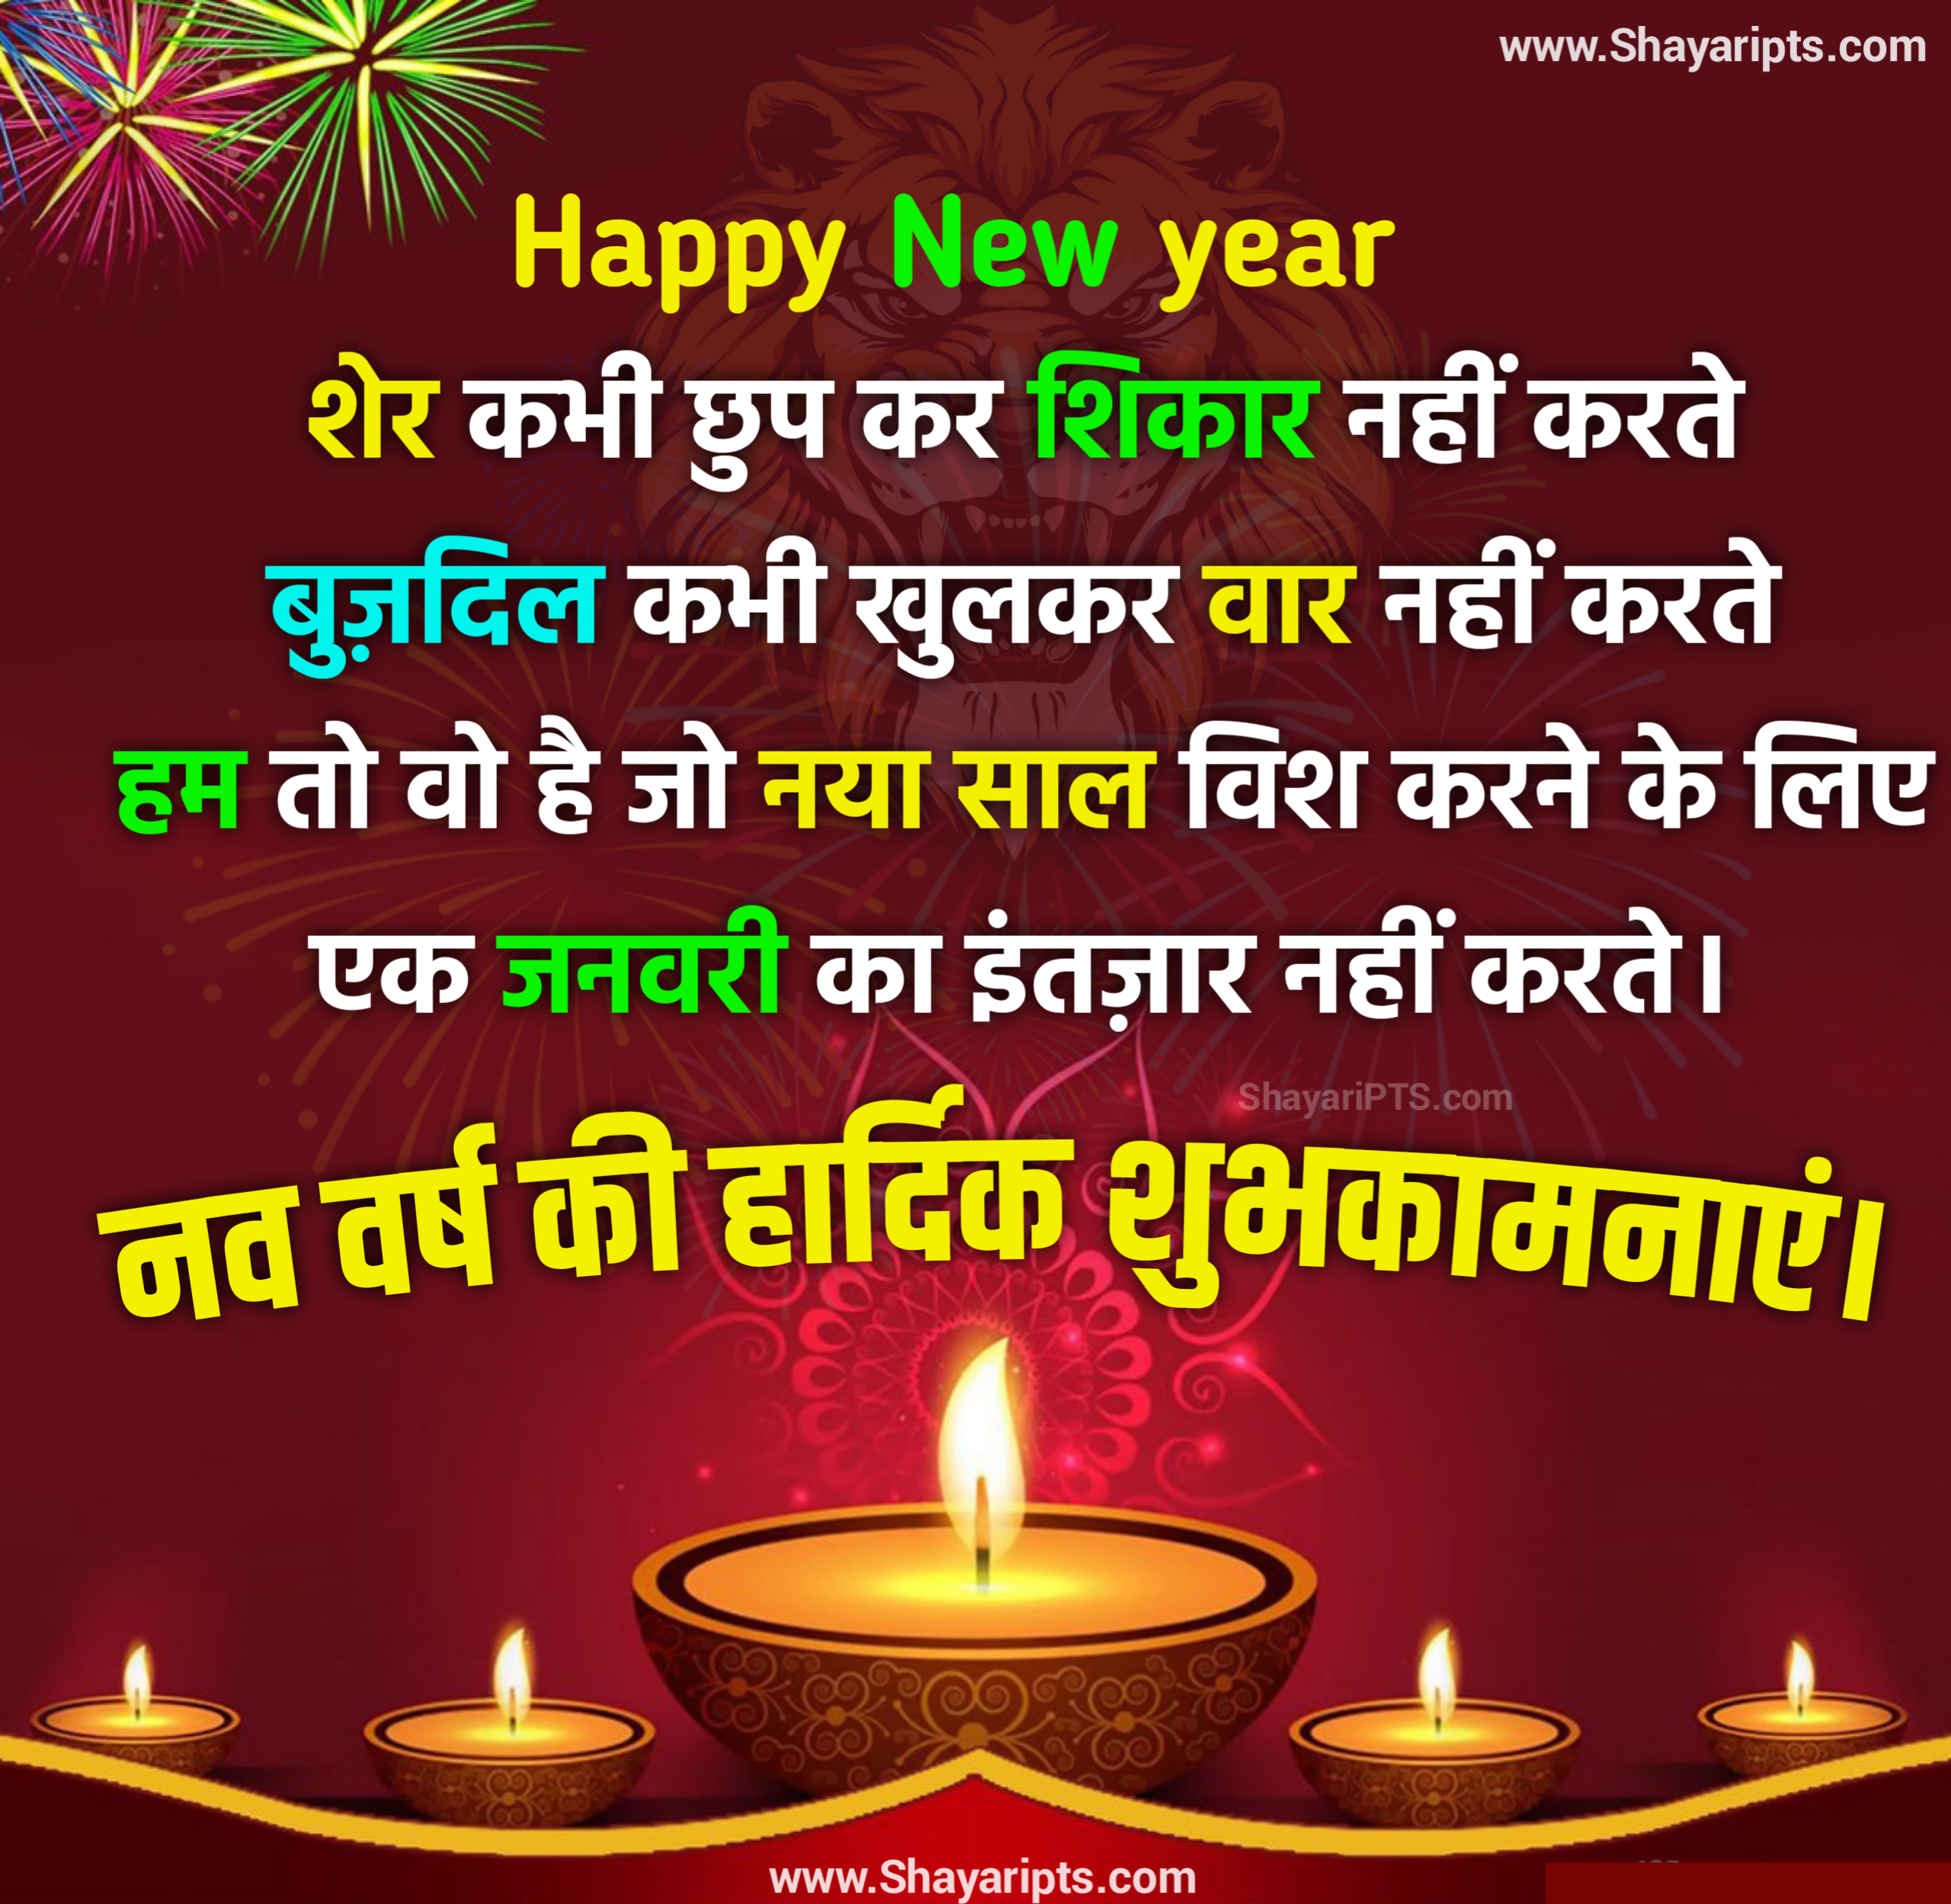 Naya Saal Shayari or images| Happy New year shayari in hindi| naya sal ka shayari| naya saal mubarak ho shayari| New year quotes in Hindi with images